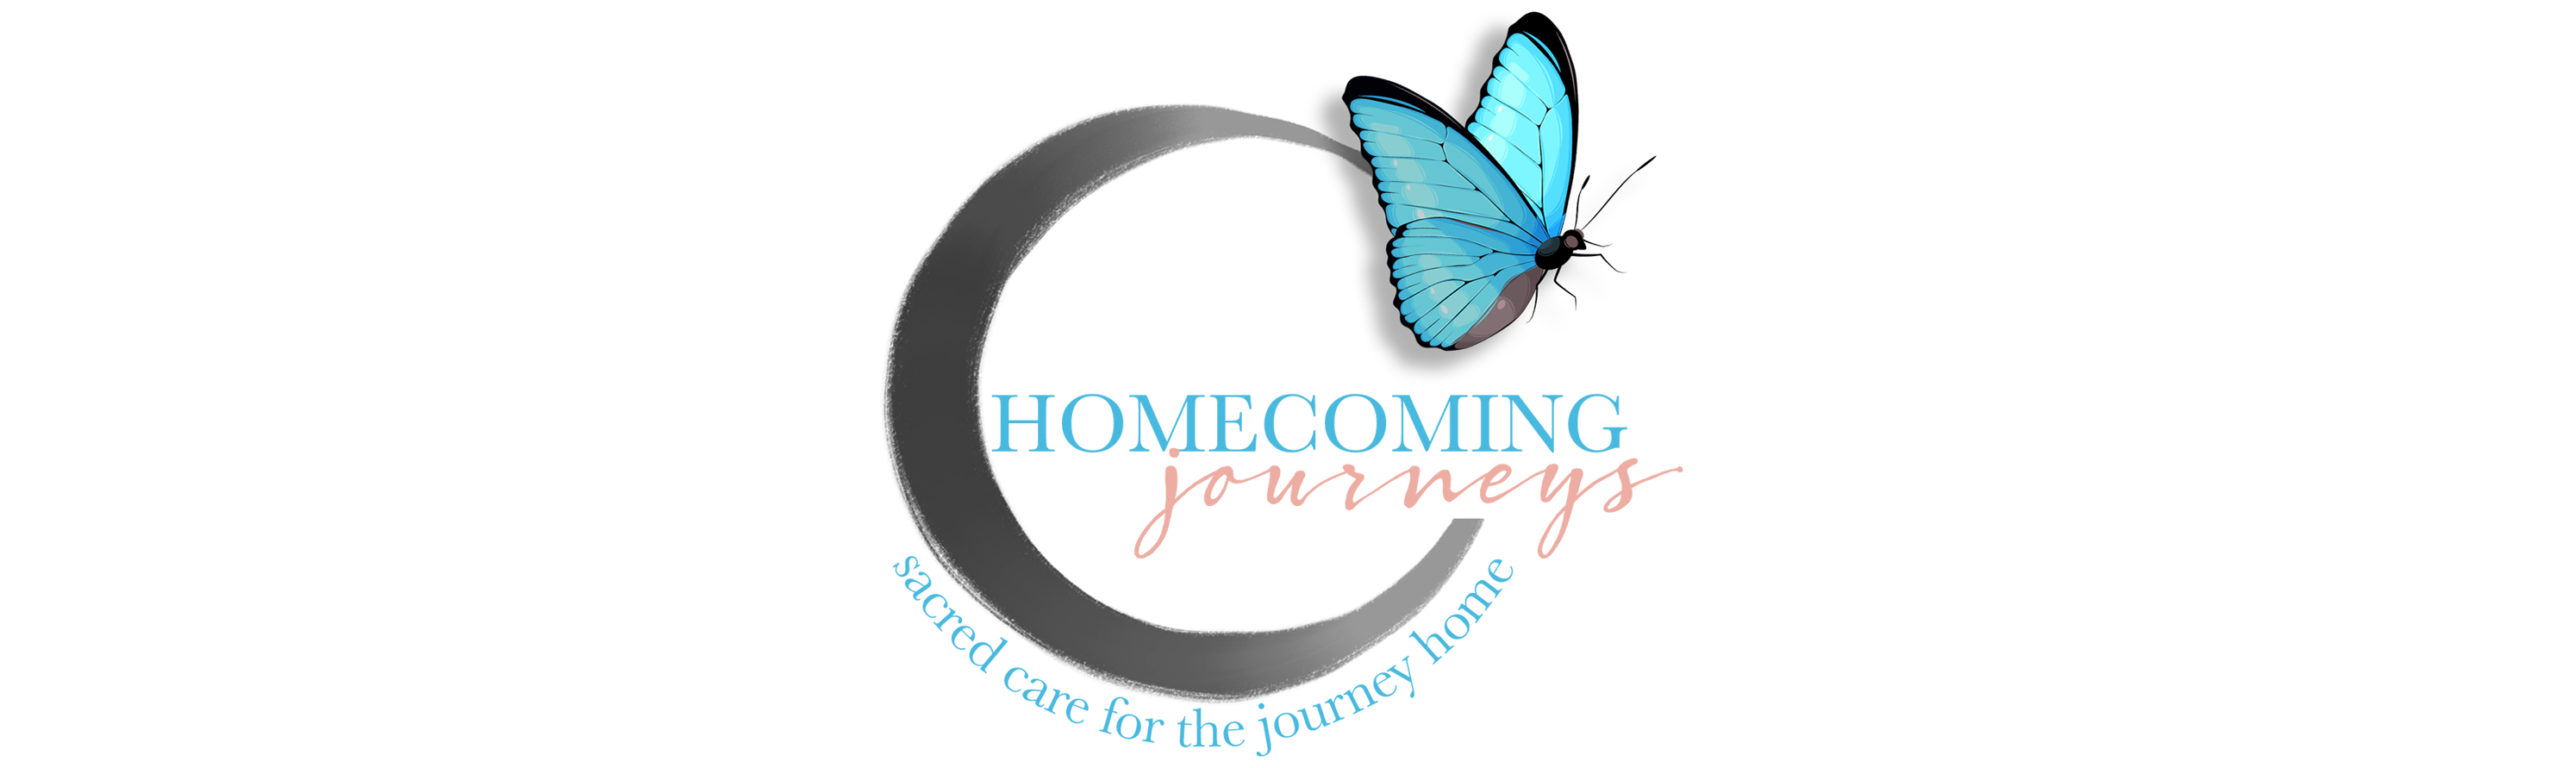 Homecoming Journeys